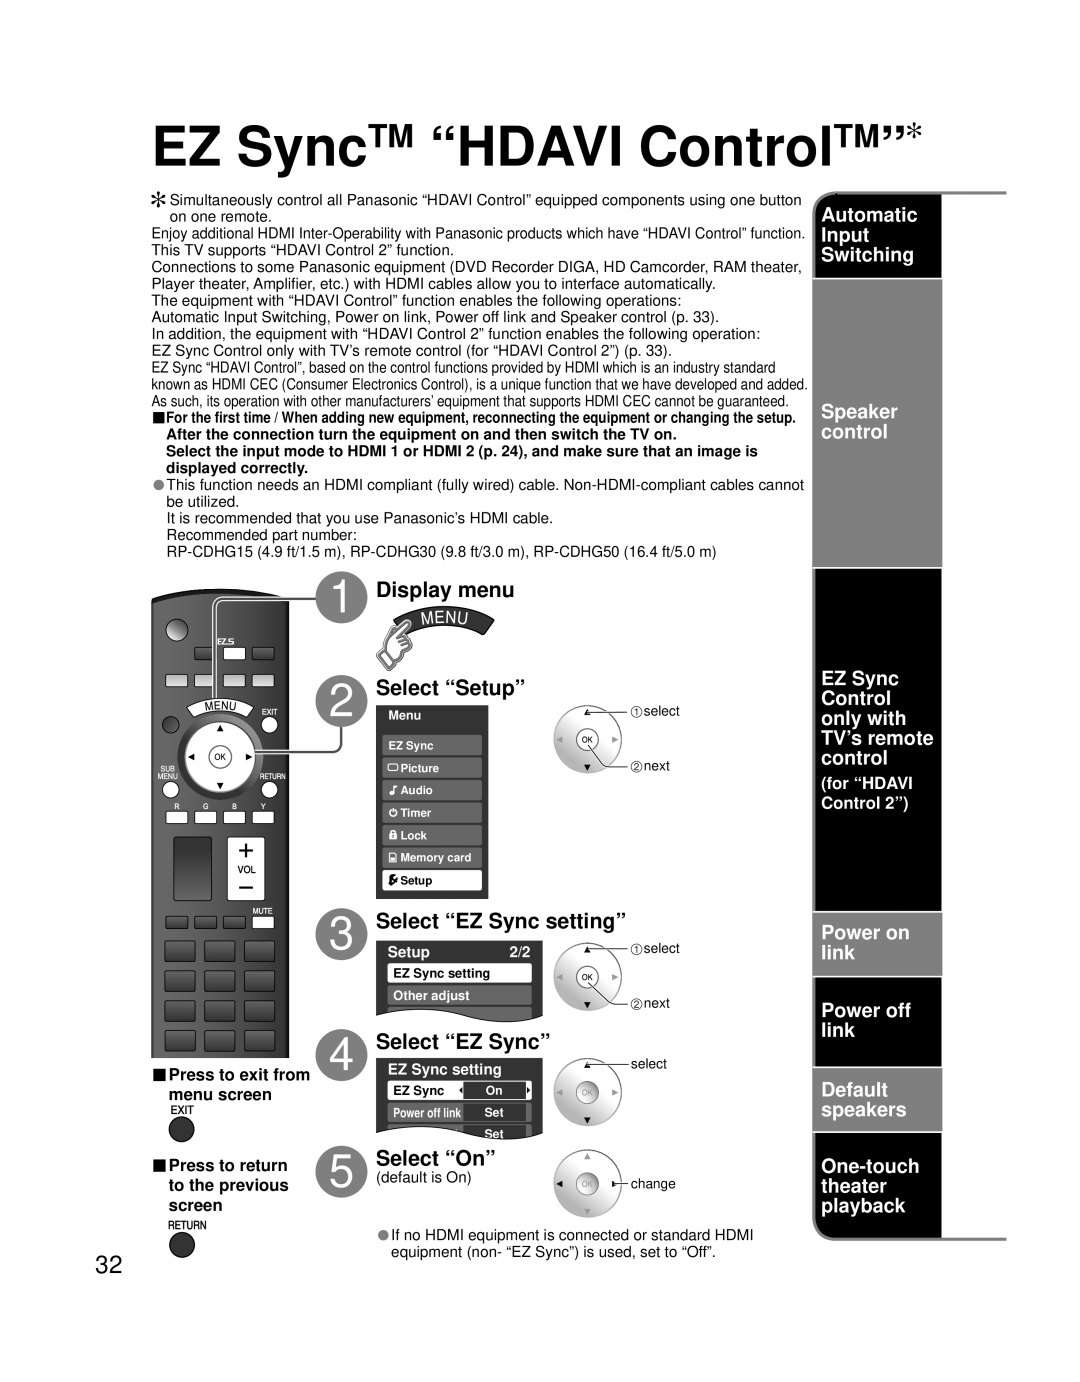 Panasonic TH 58PZ700U EZ SyncTM “HDAVI ControlTM”, Display menu, Select “Setup”, Select “EZ Sync setting”, Select “On” 